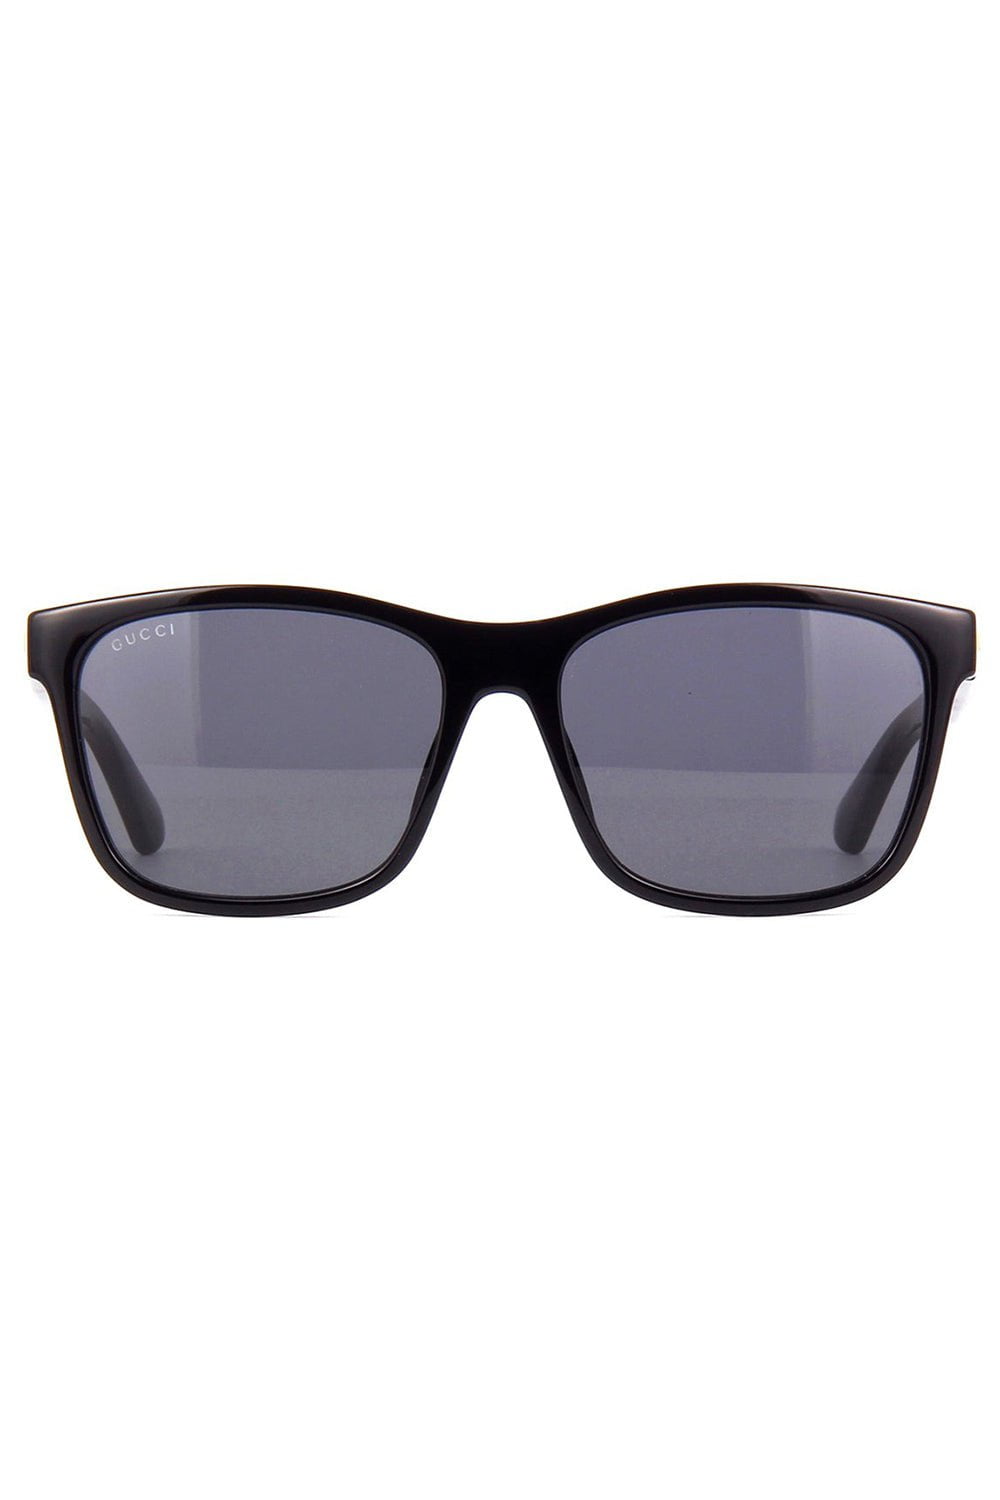 GUCCI-Rectangular Sunglasses-BLACK